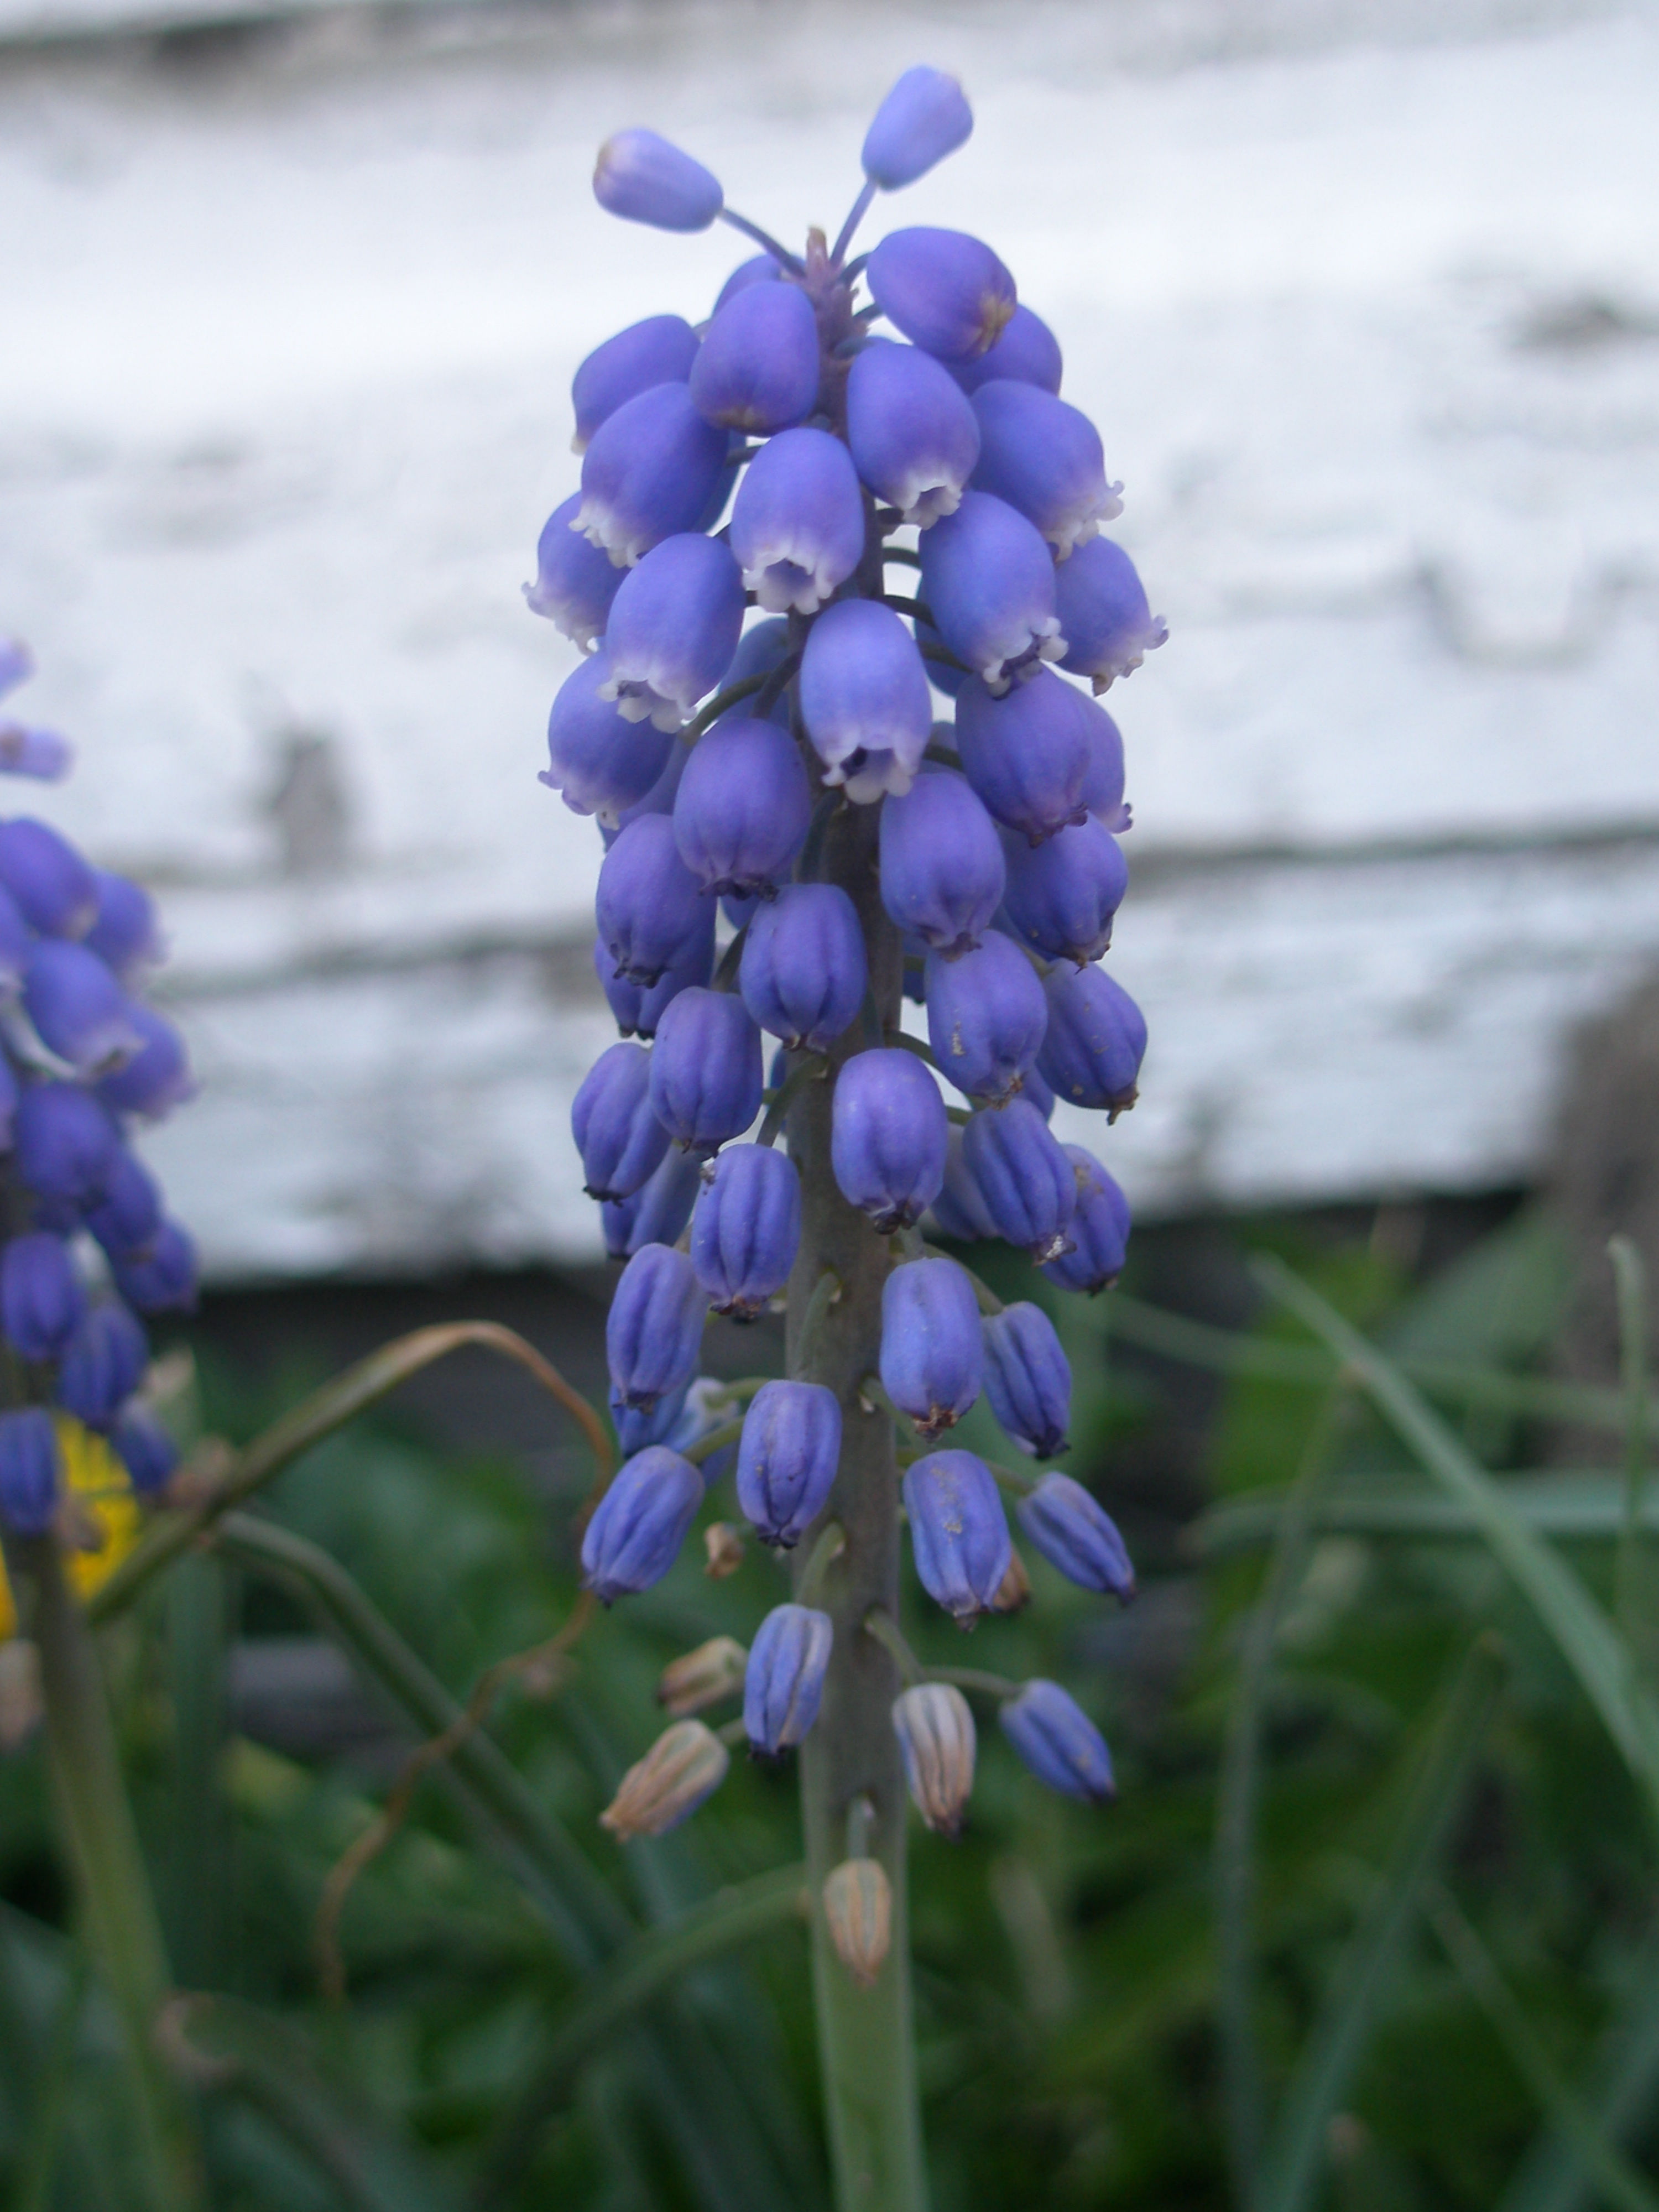 Little Purple Flowers – “Muscari” |